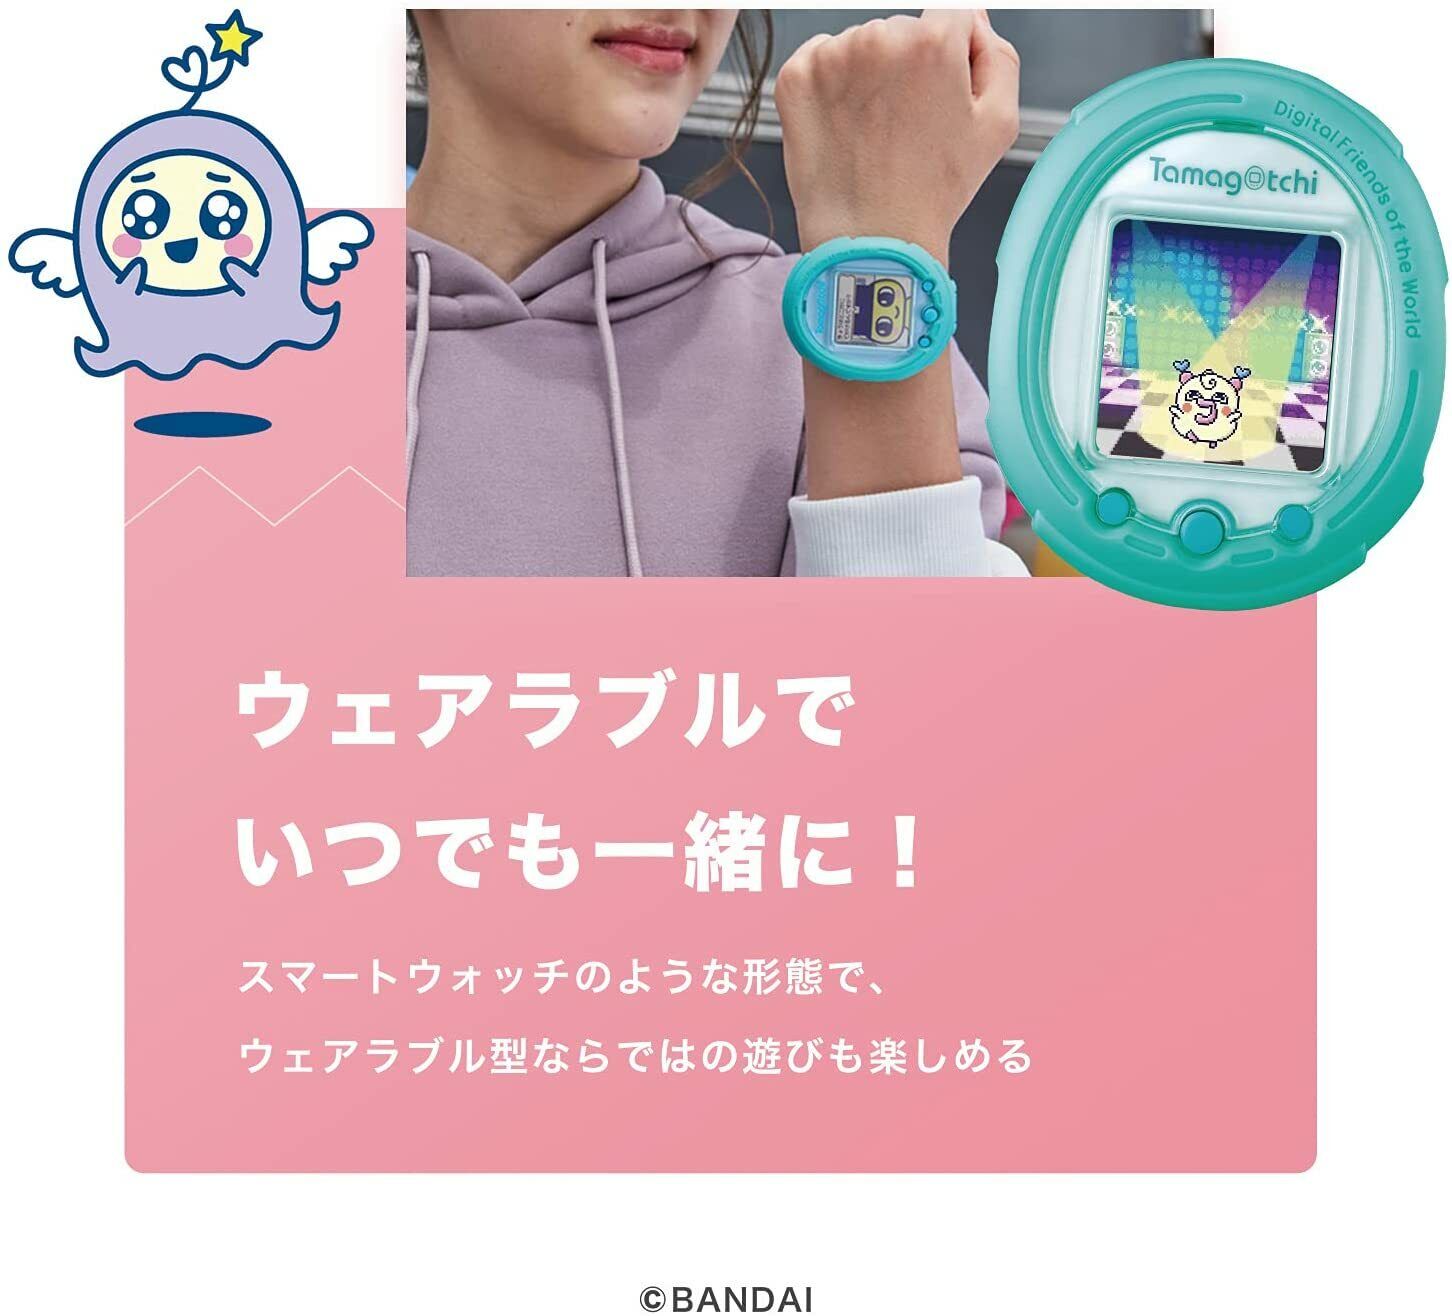 Bandai Mint Blue Smart Tamagotchi - 713014700 for sale online | eBay